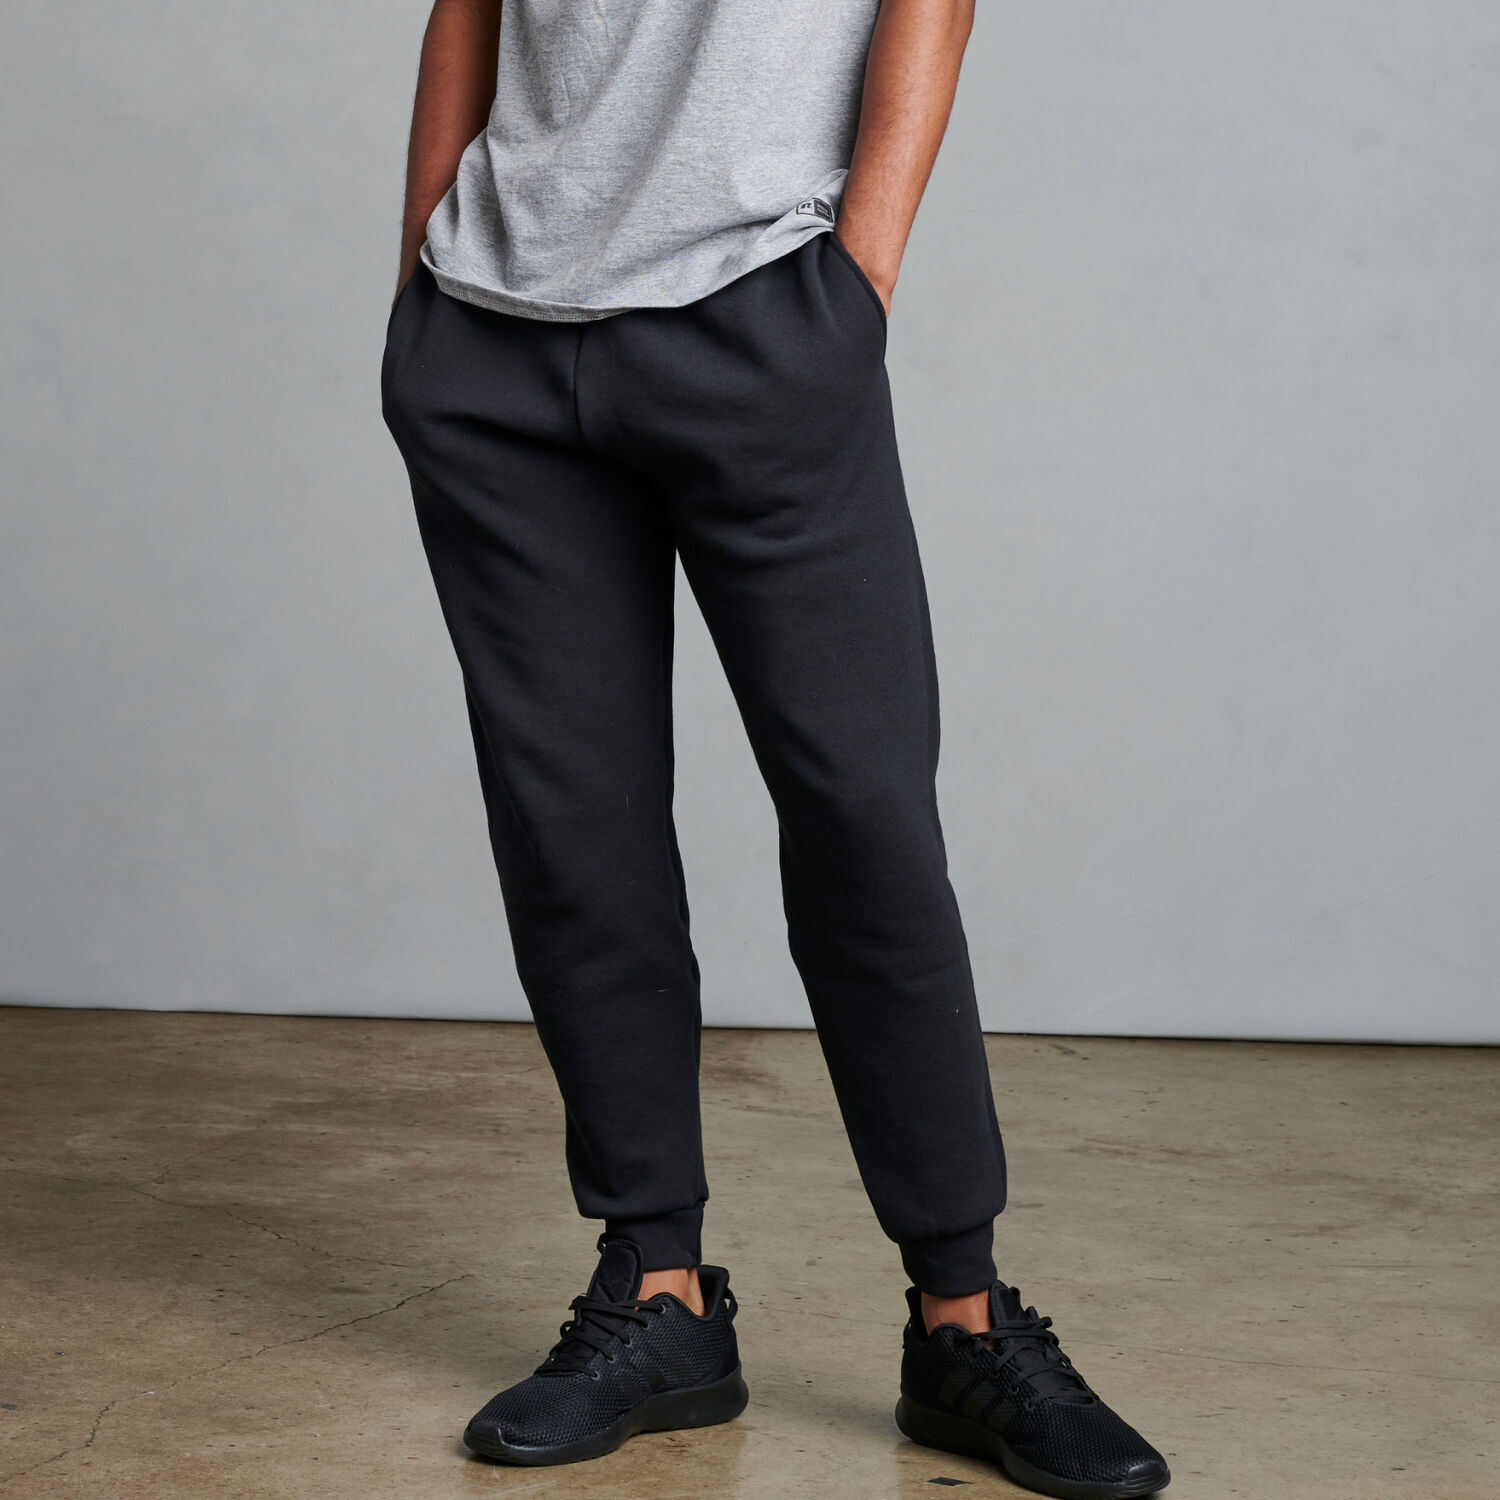 Xersion Men's Gray-Black Workout Jogger Taper Pants Sz Med Activewear  Quick-Dri